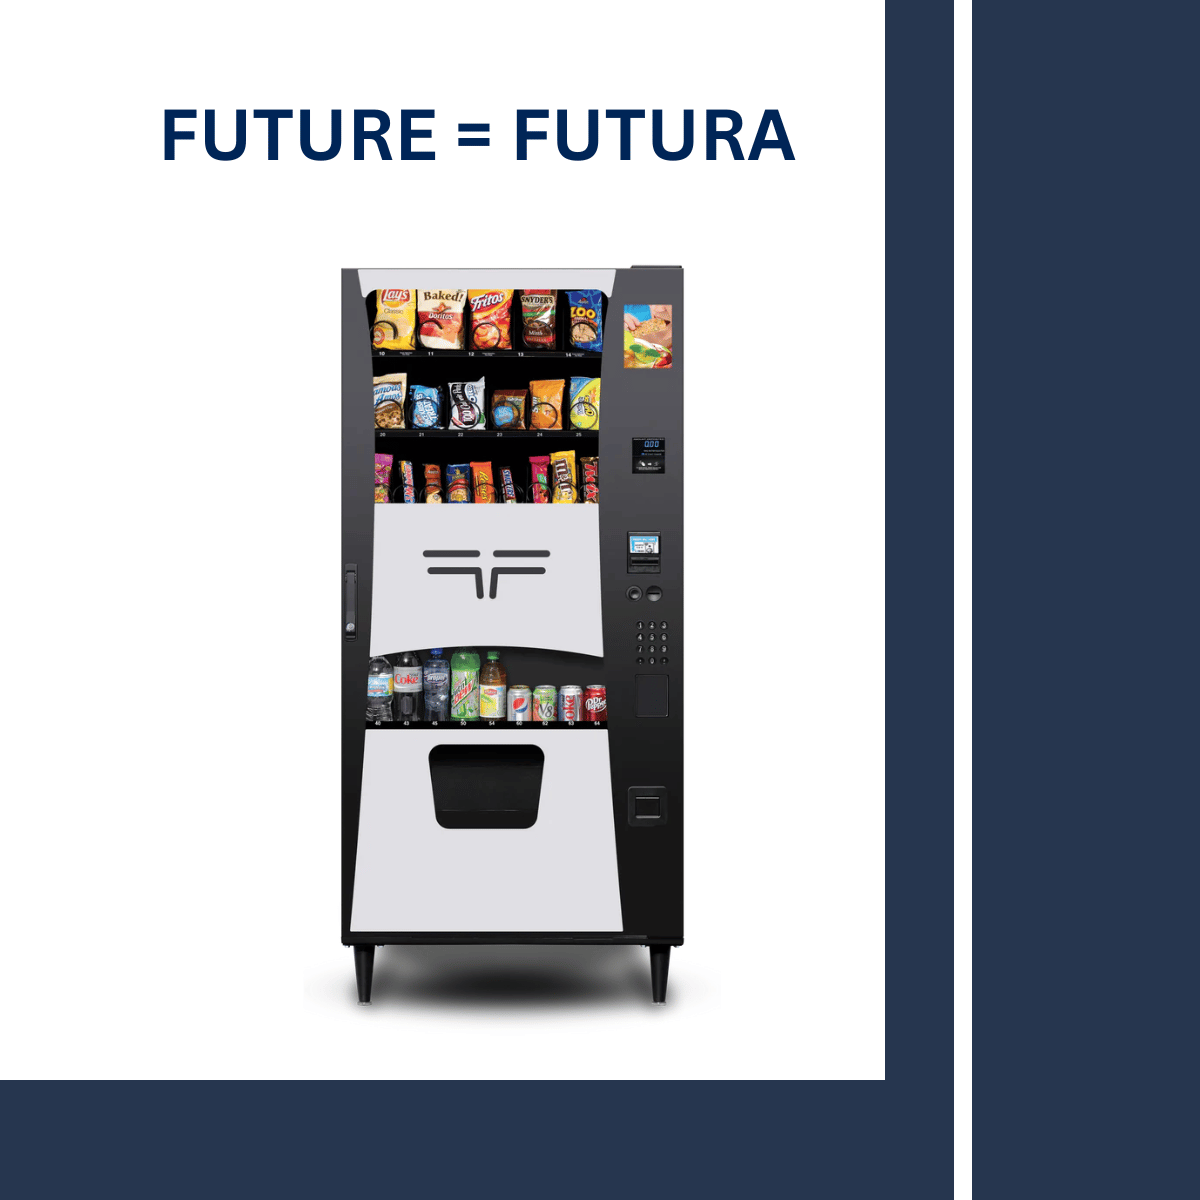 COMBO DRINK SNACK MACHINES: THE FUTURE IS FUTURA